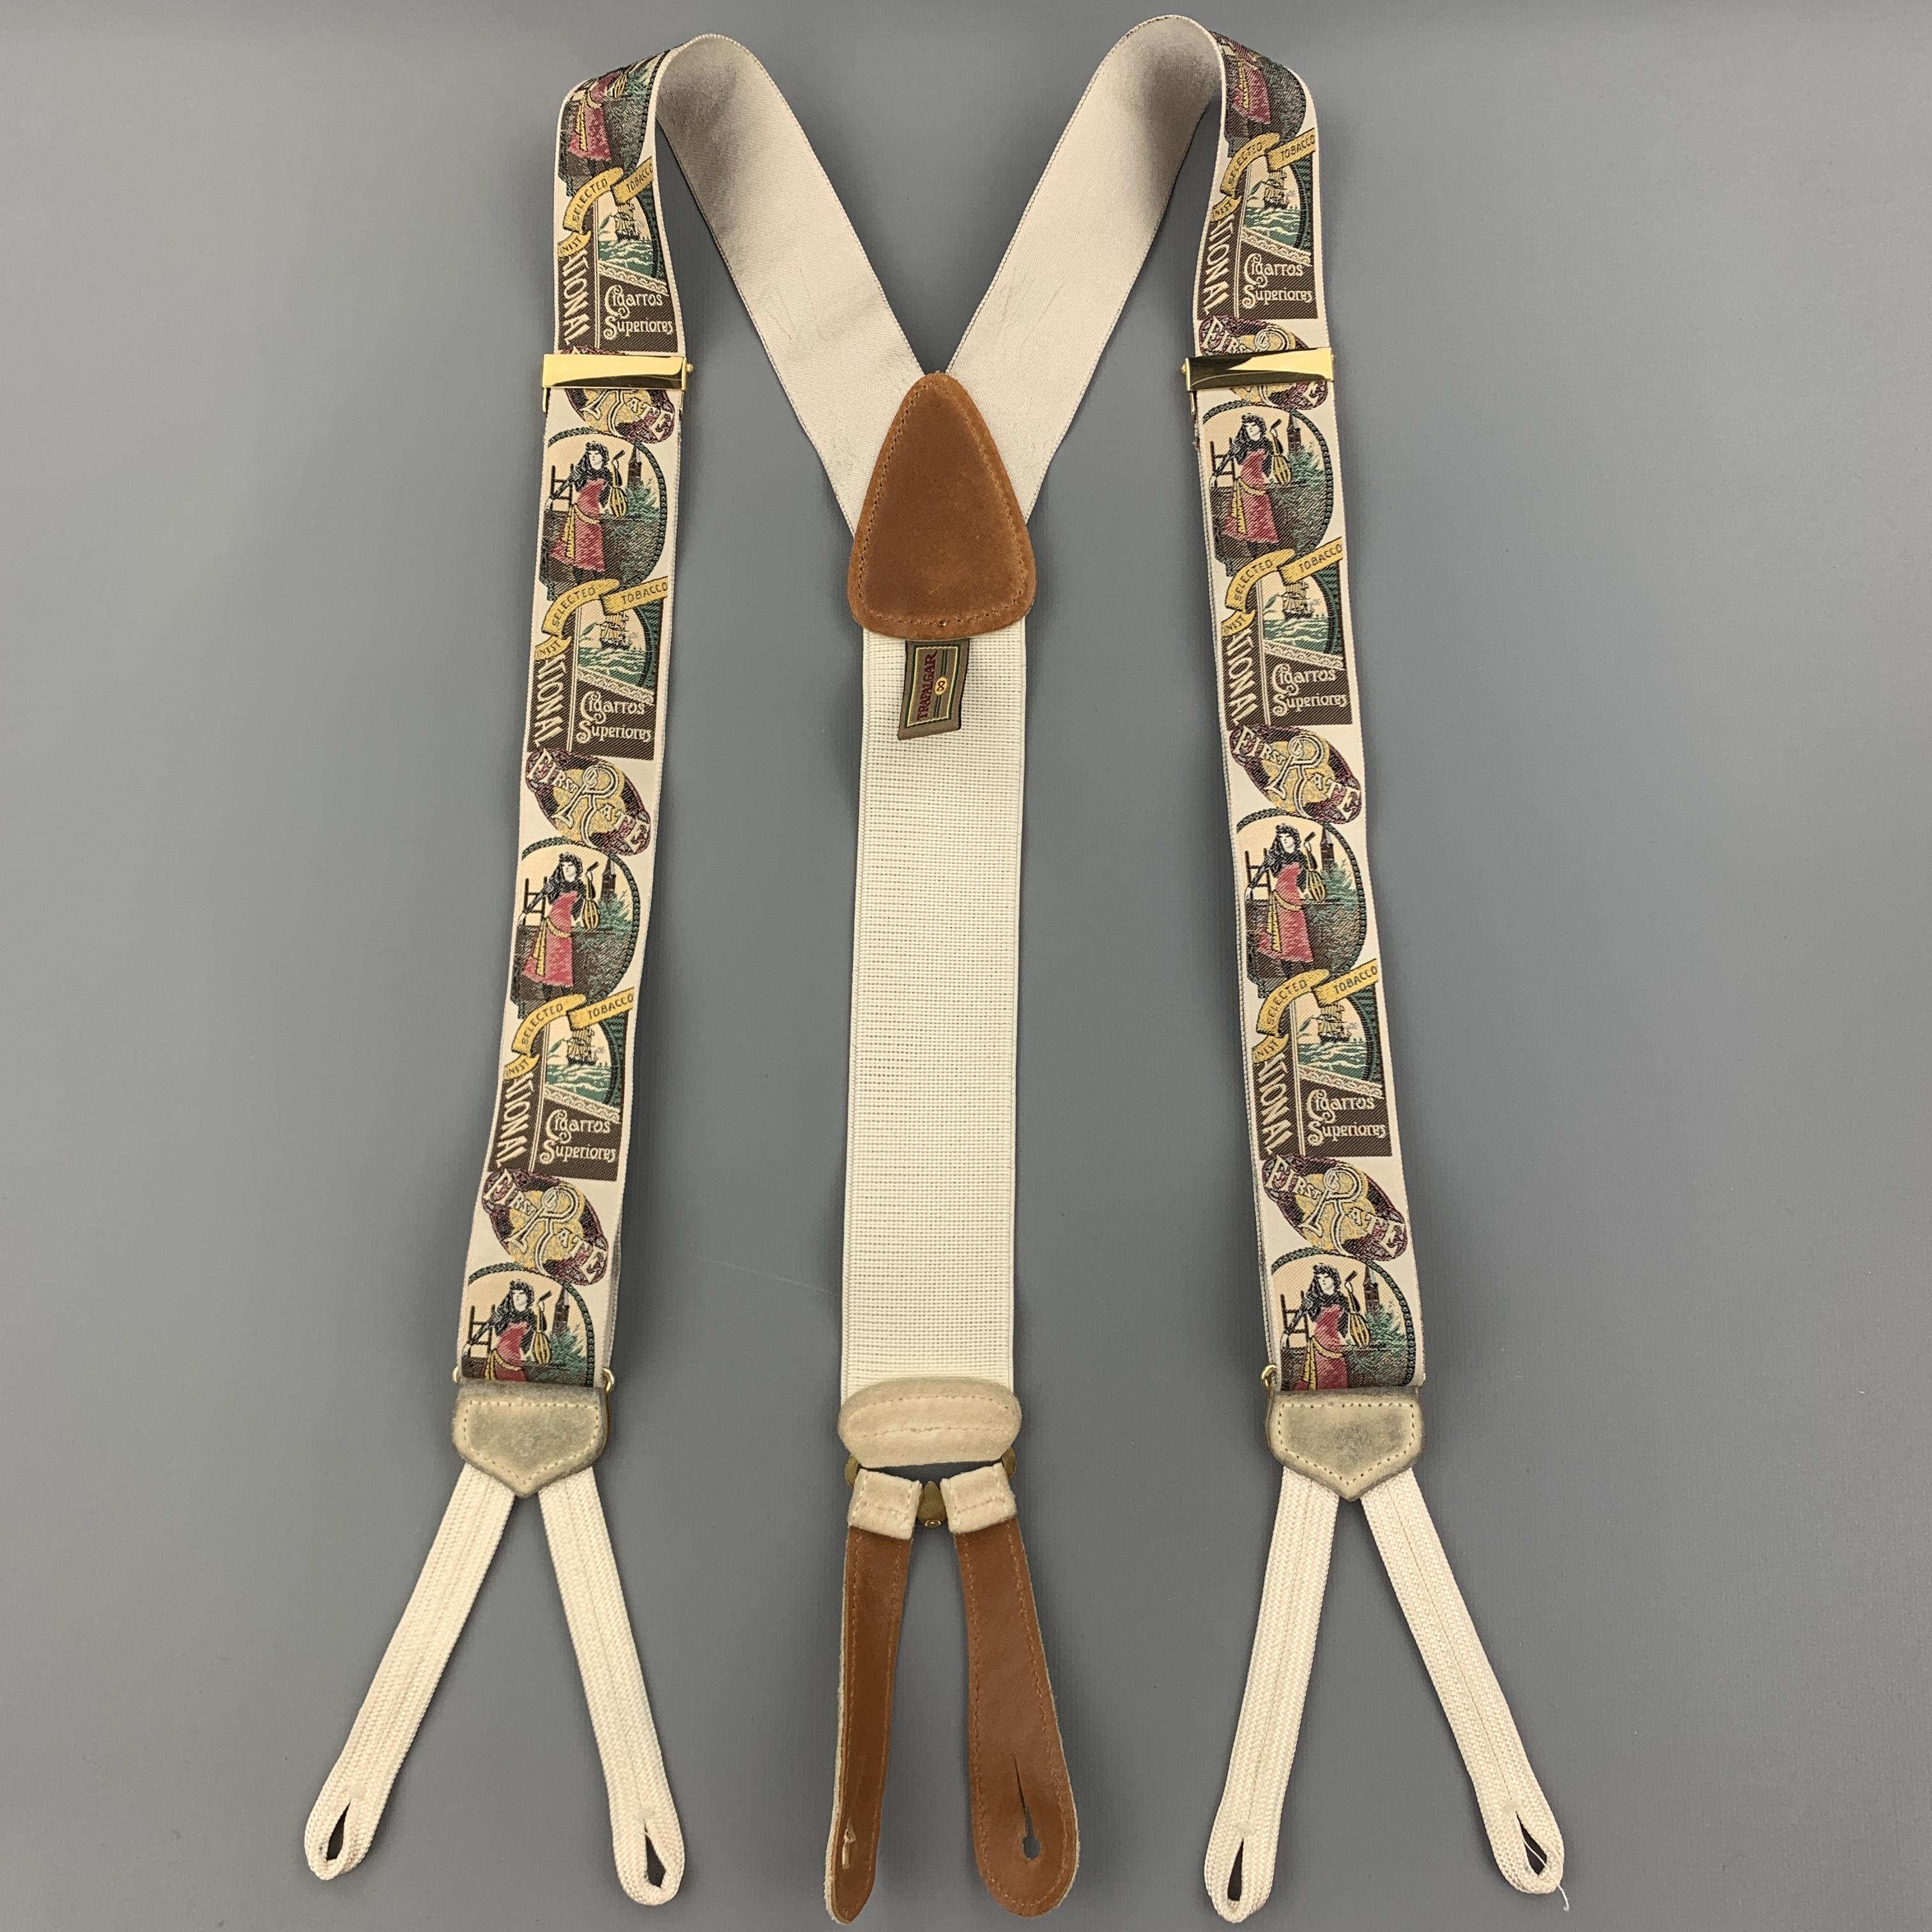 TRAFALGAR suspenders comes in a beige 